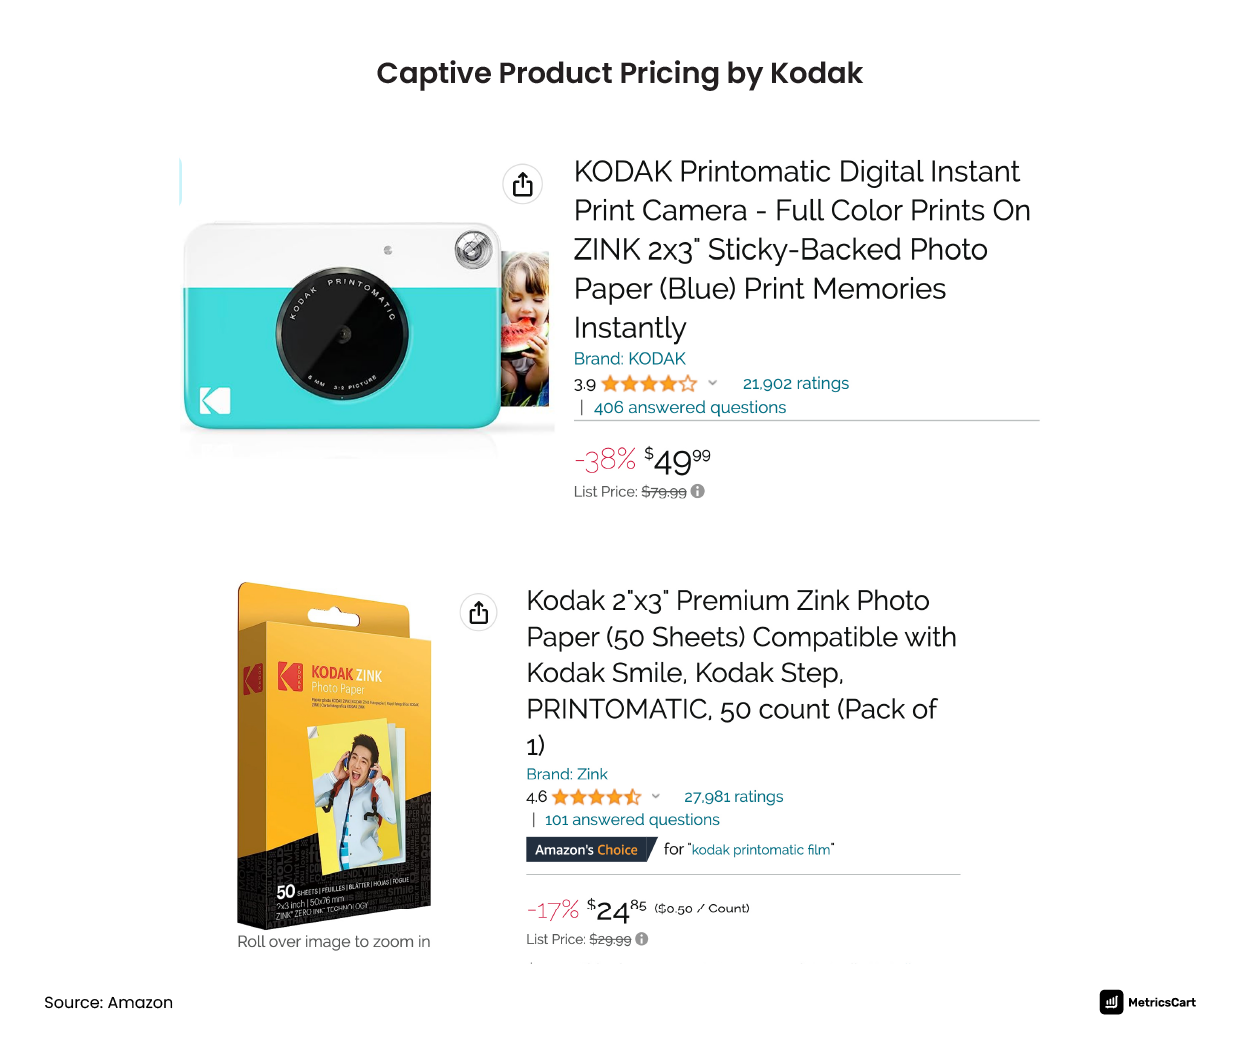 Kodak captive product pricing example